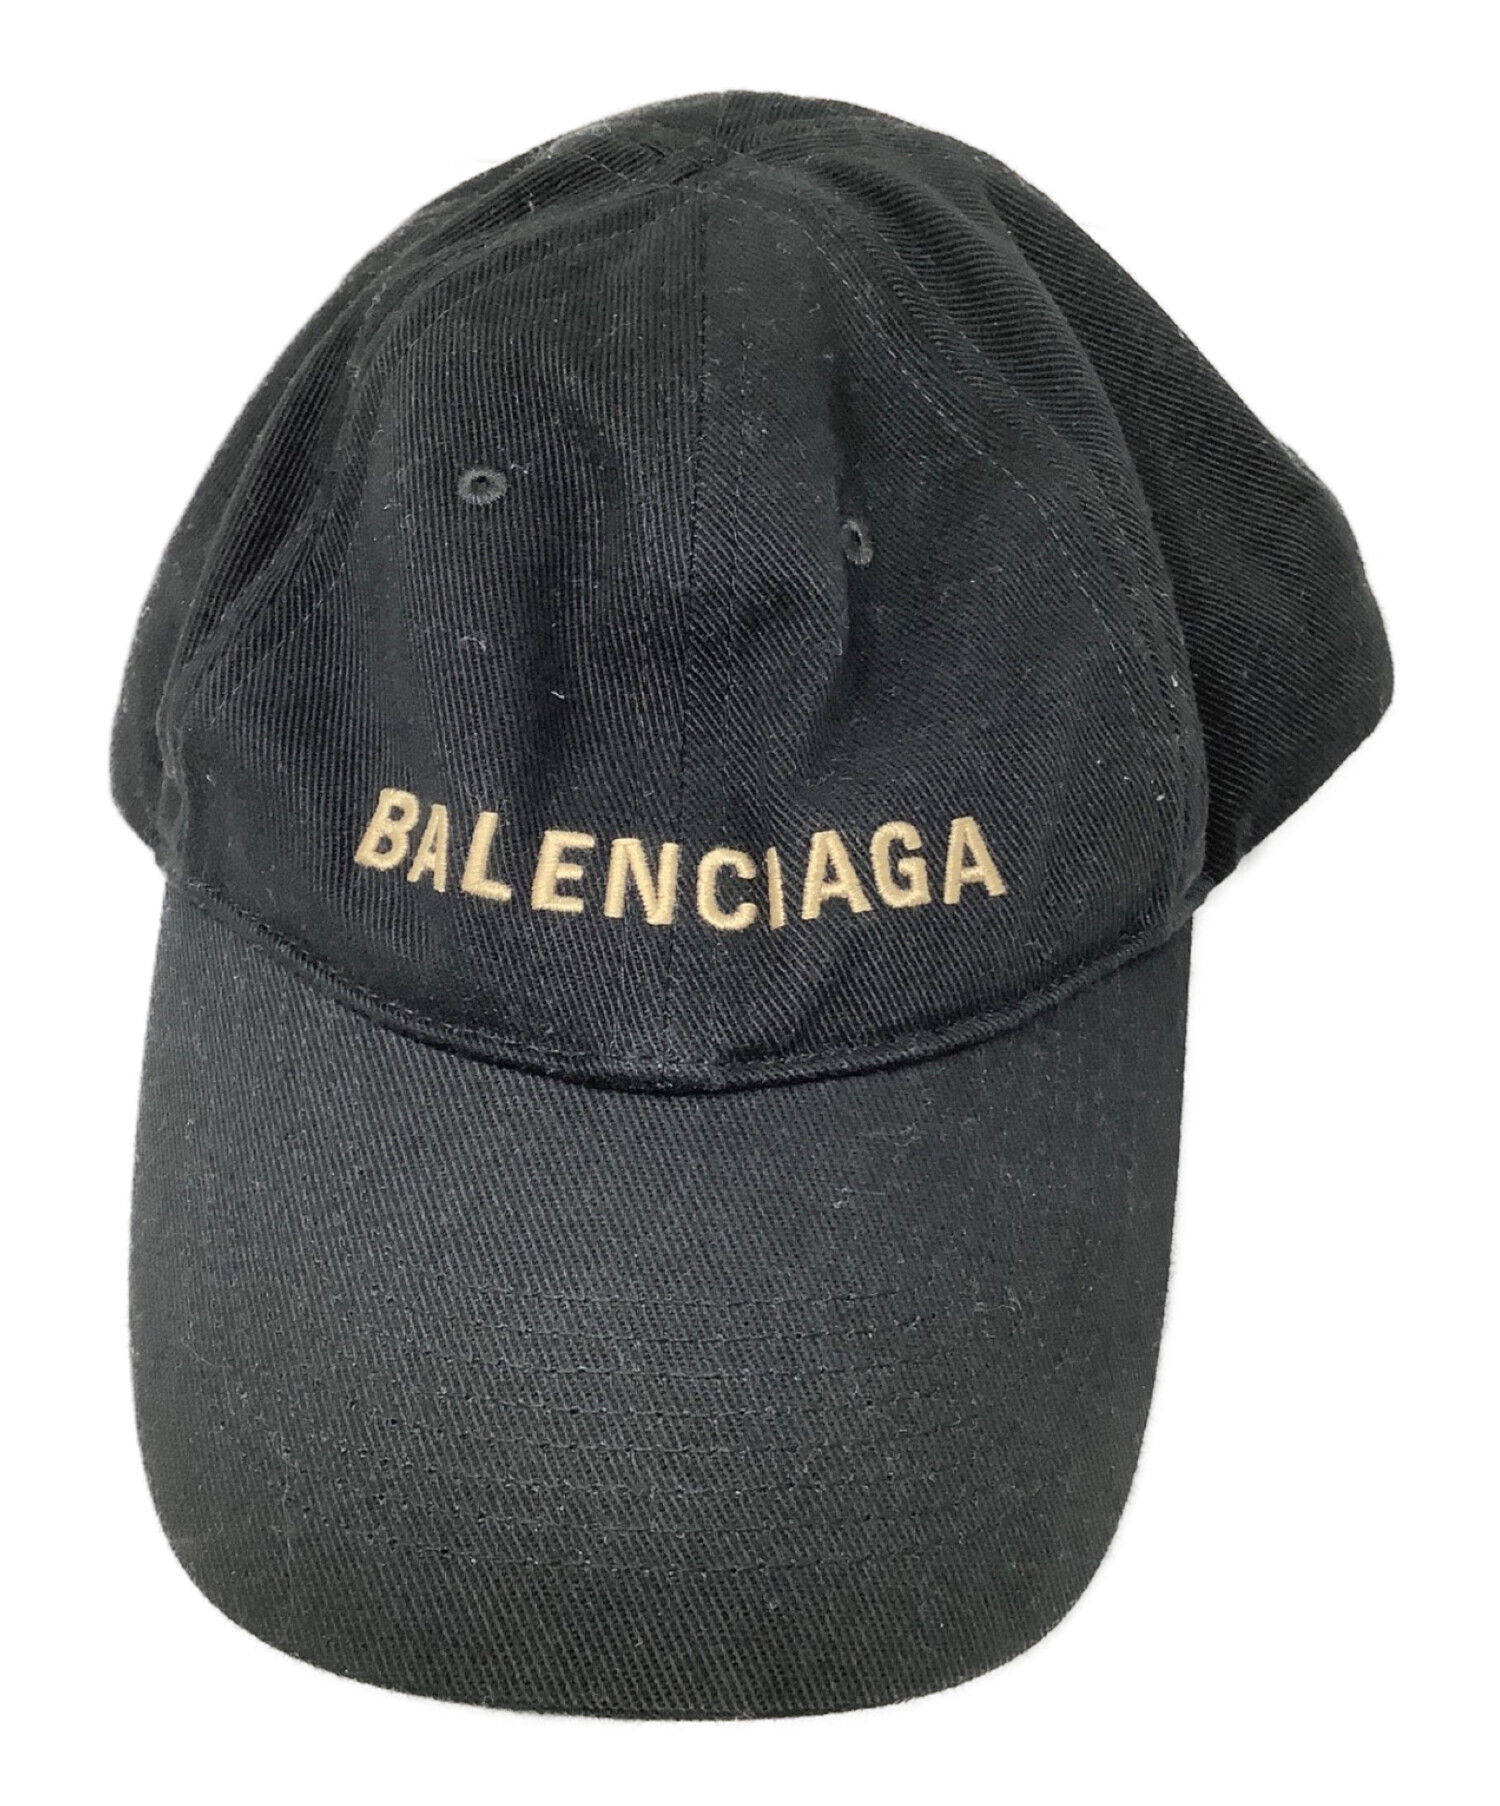 BALENCIAGA (バレンシアガ) キャップ ブラック サイズ:59cm L